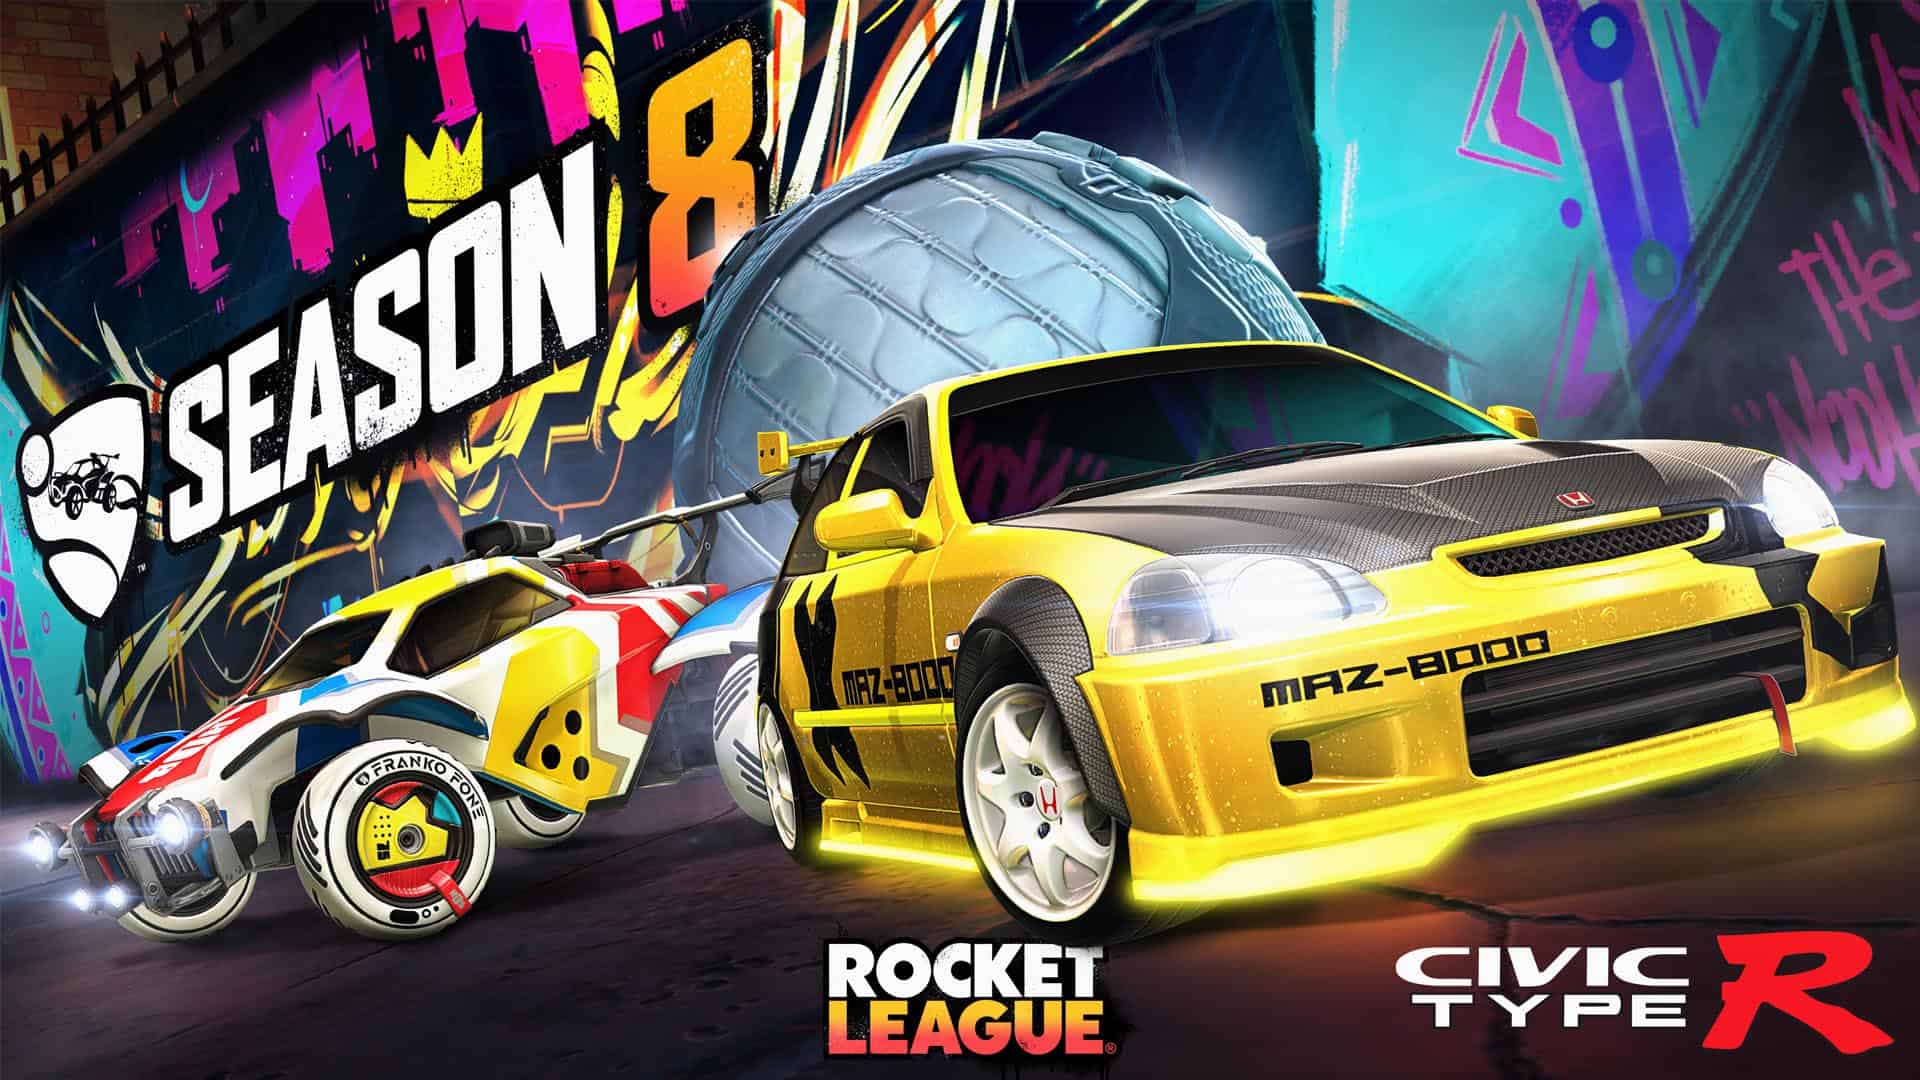 The EK9 Honda Civic Type R is part of Rocket League Season 8